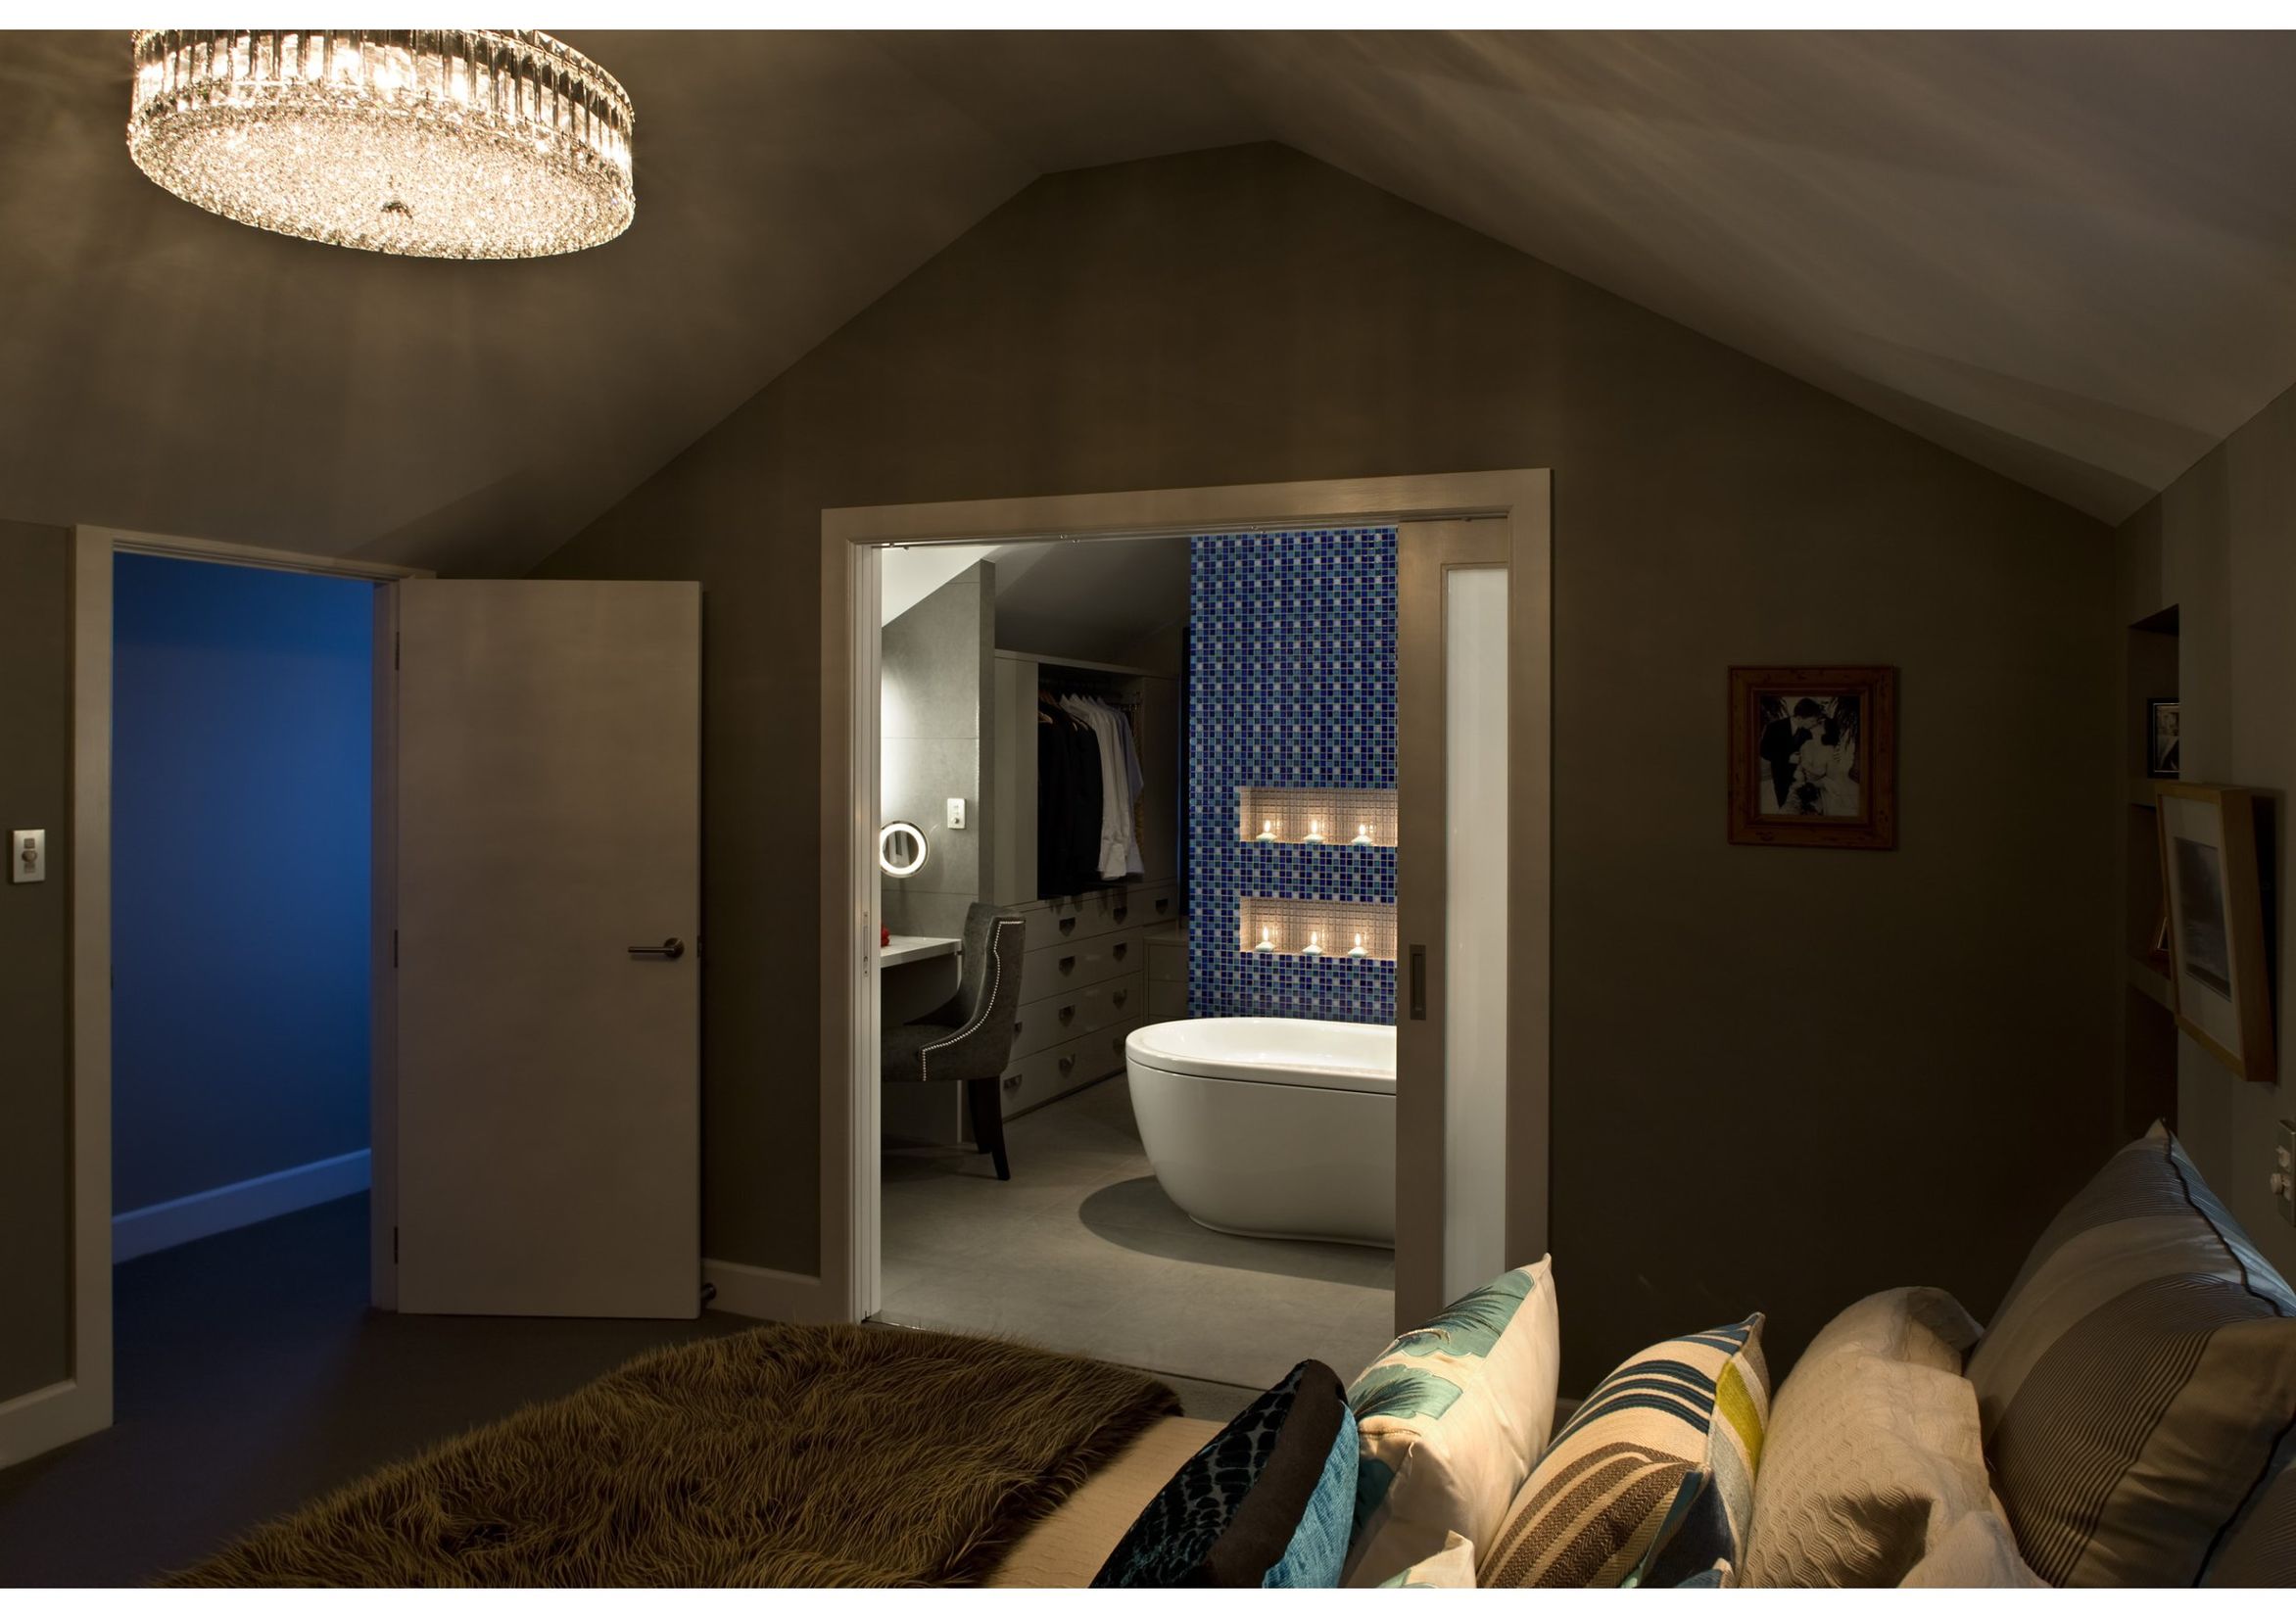 spa temple | Dunlop Design | master suite and bathroom interior design